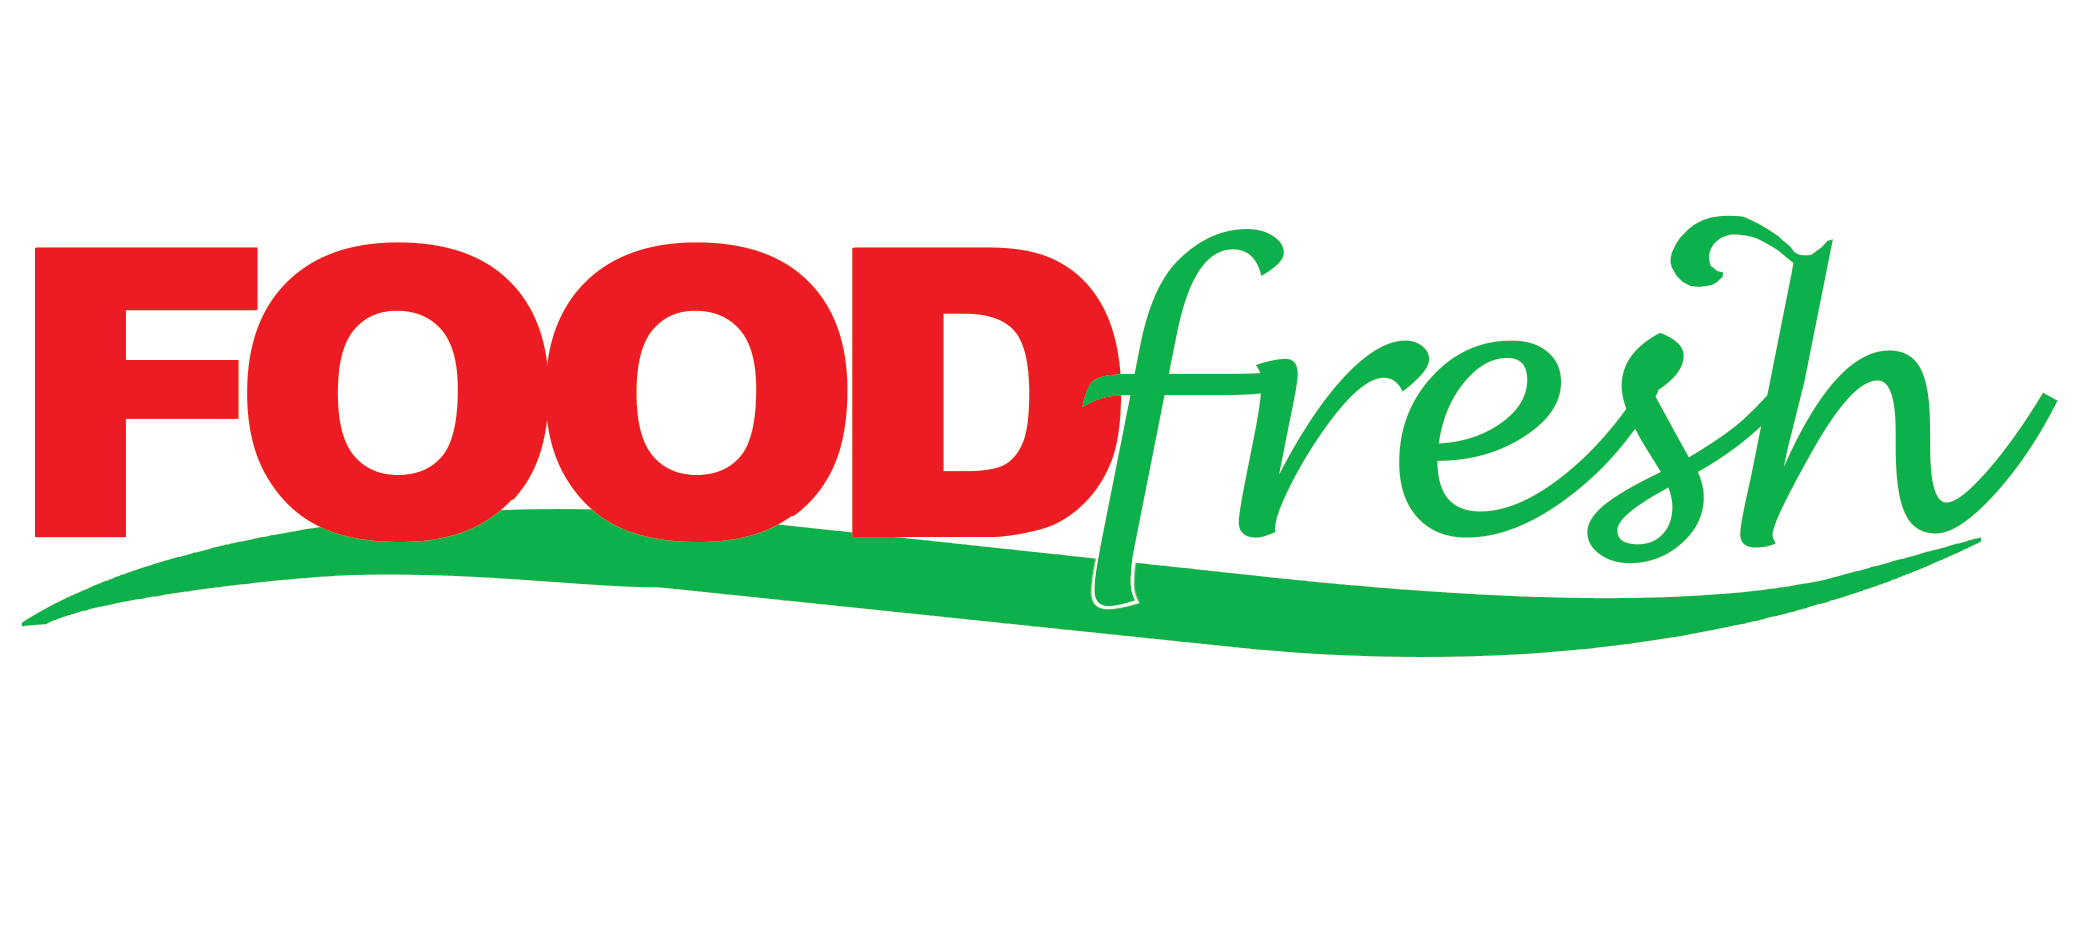 A theme logo of Food Fresh